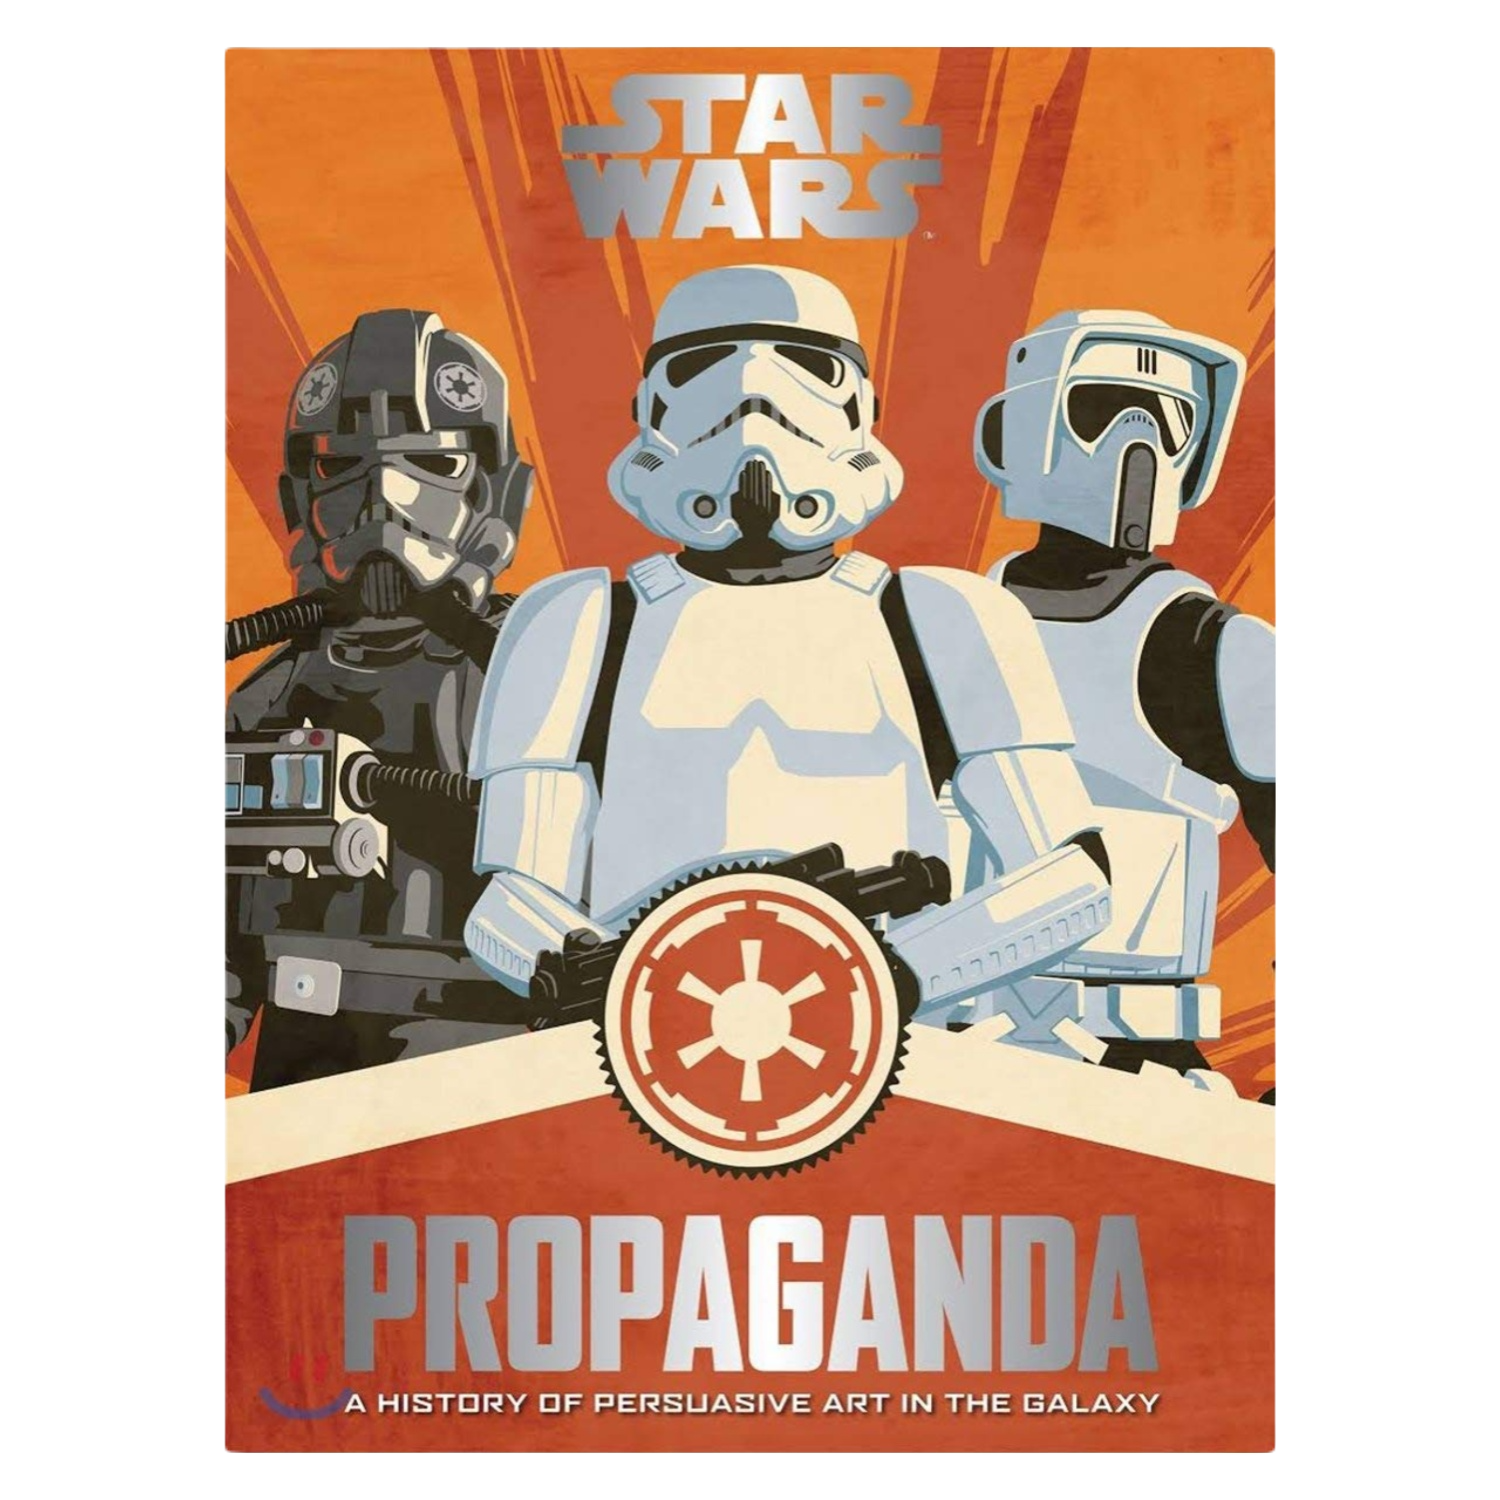 Star Wars Propaganda: A History of Persuasive Art in the Galaxy by Pablo Hidalgo (2016)